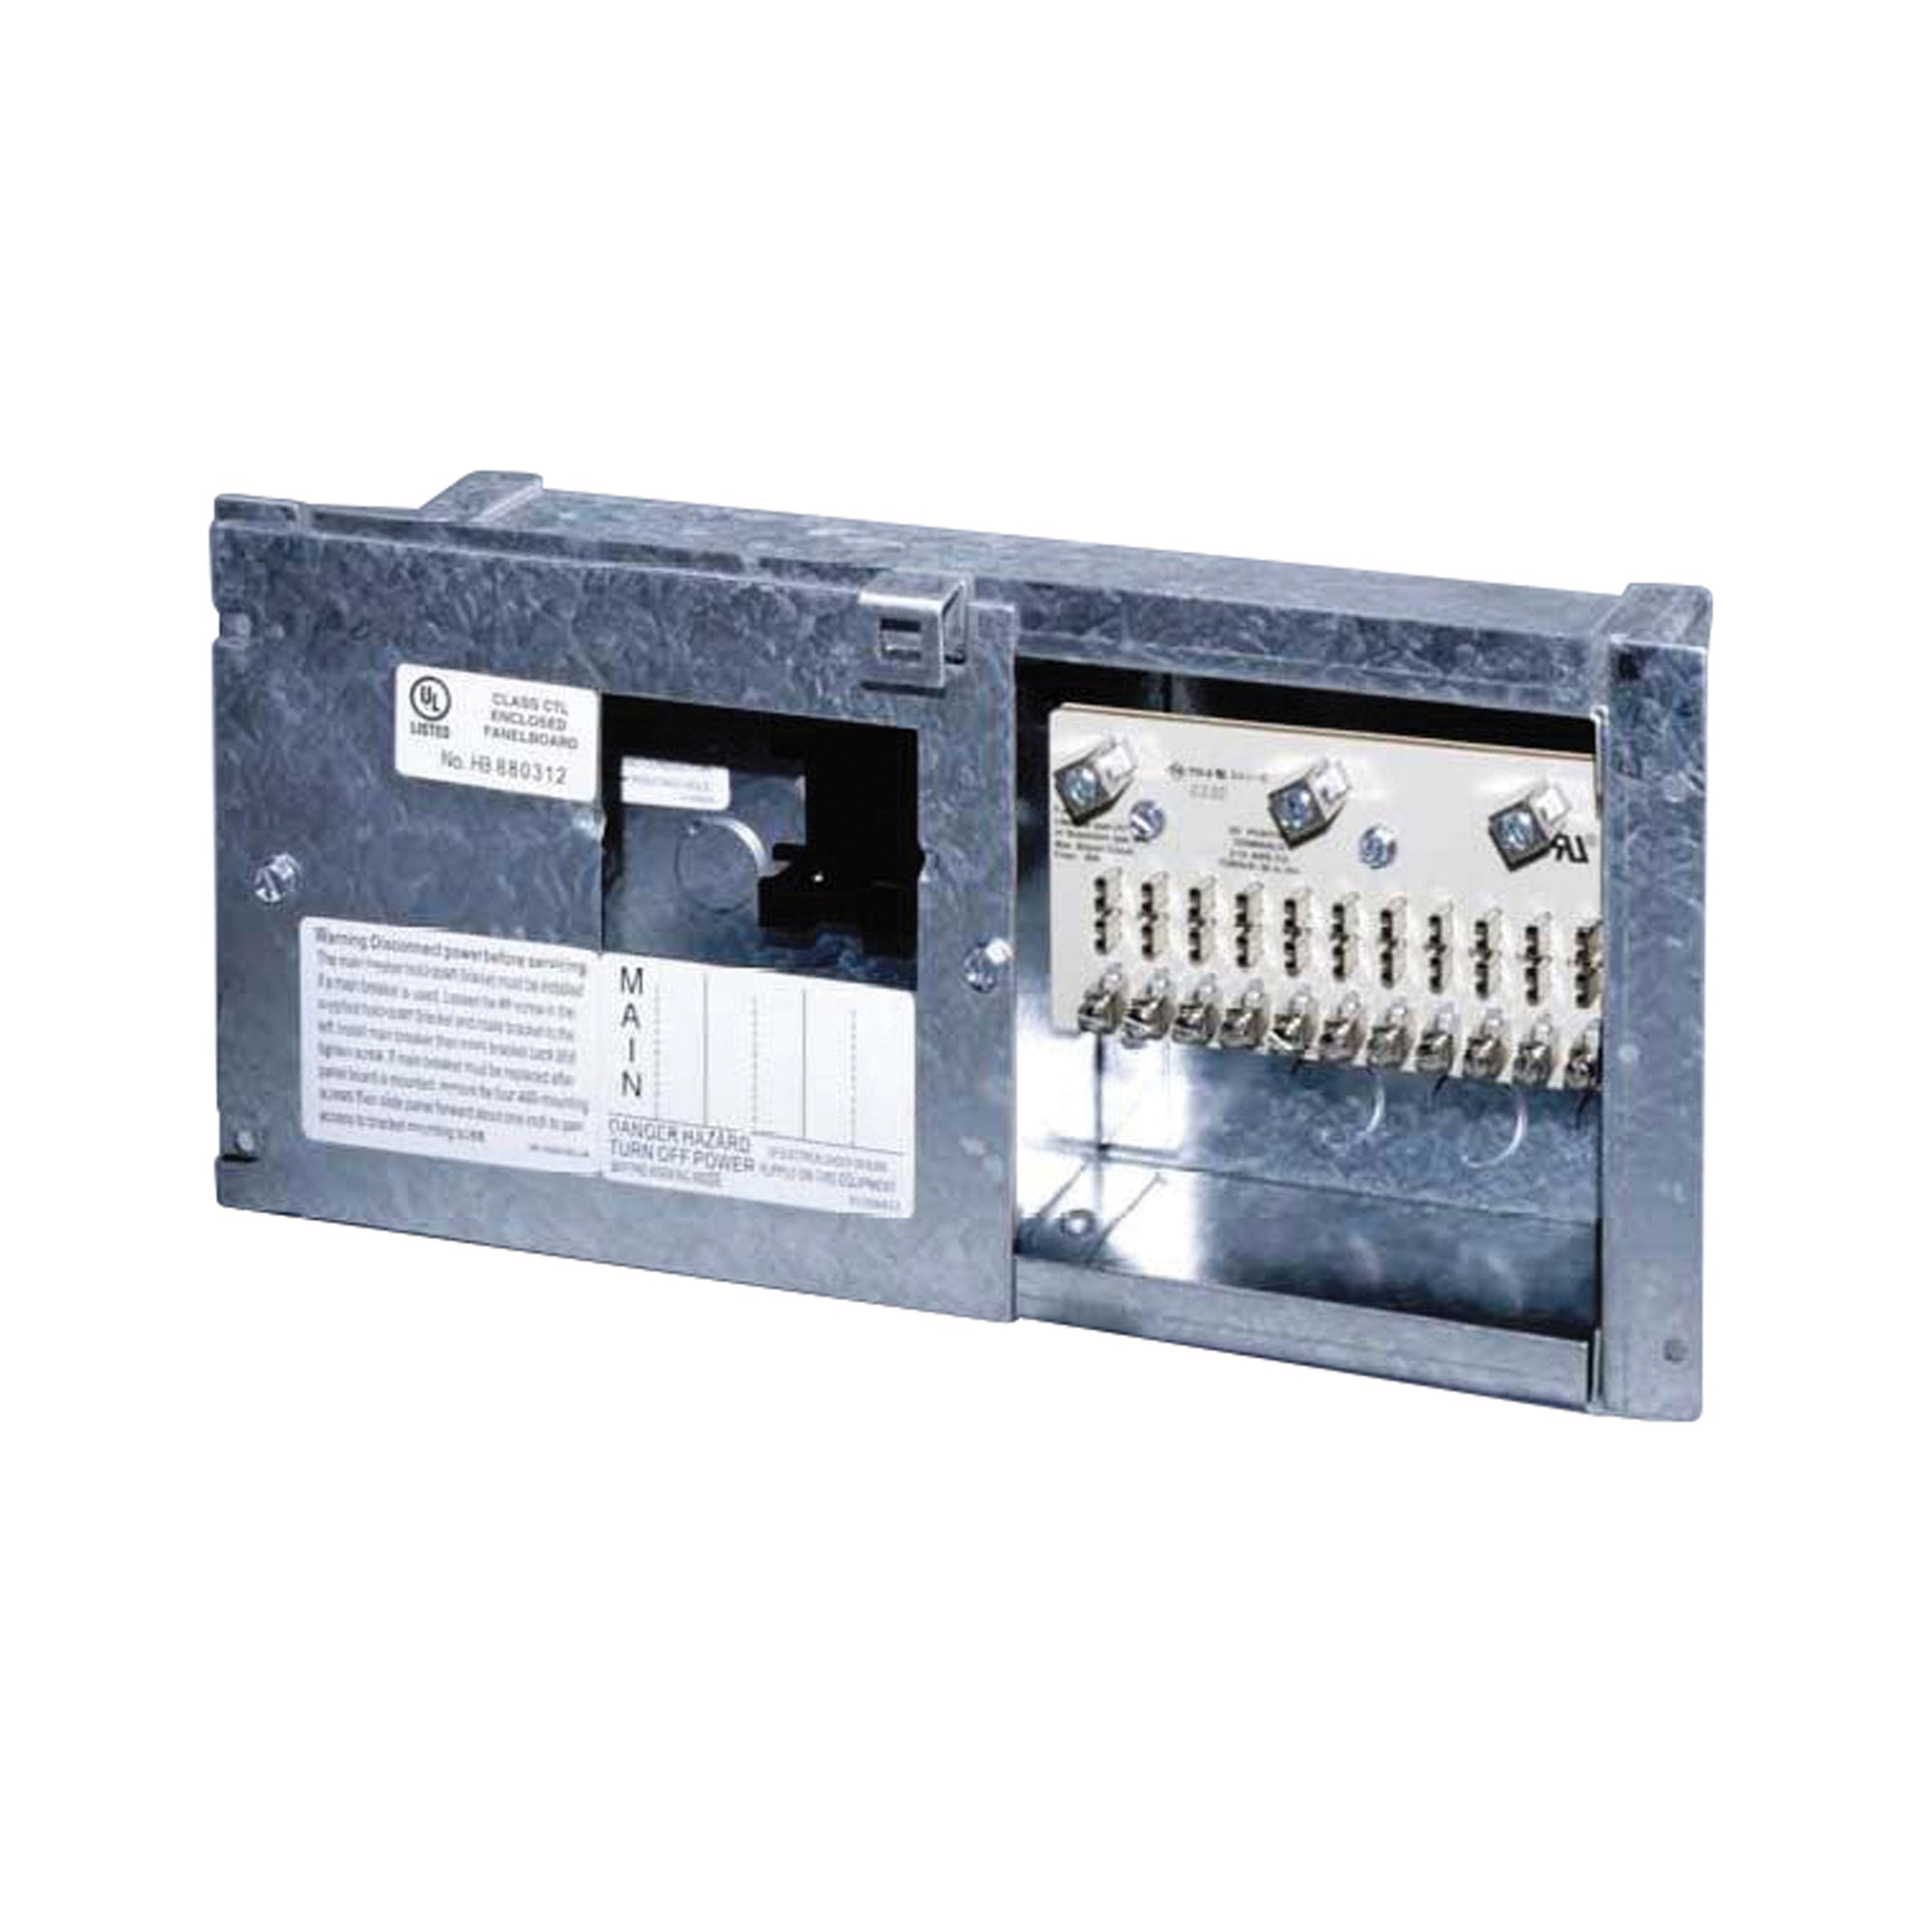 Parallax 80D 30 Amp Dist Panel 120V Ac